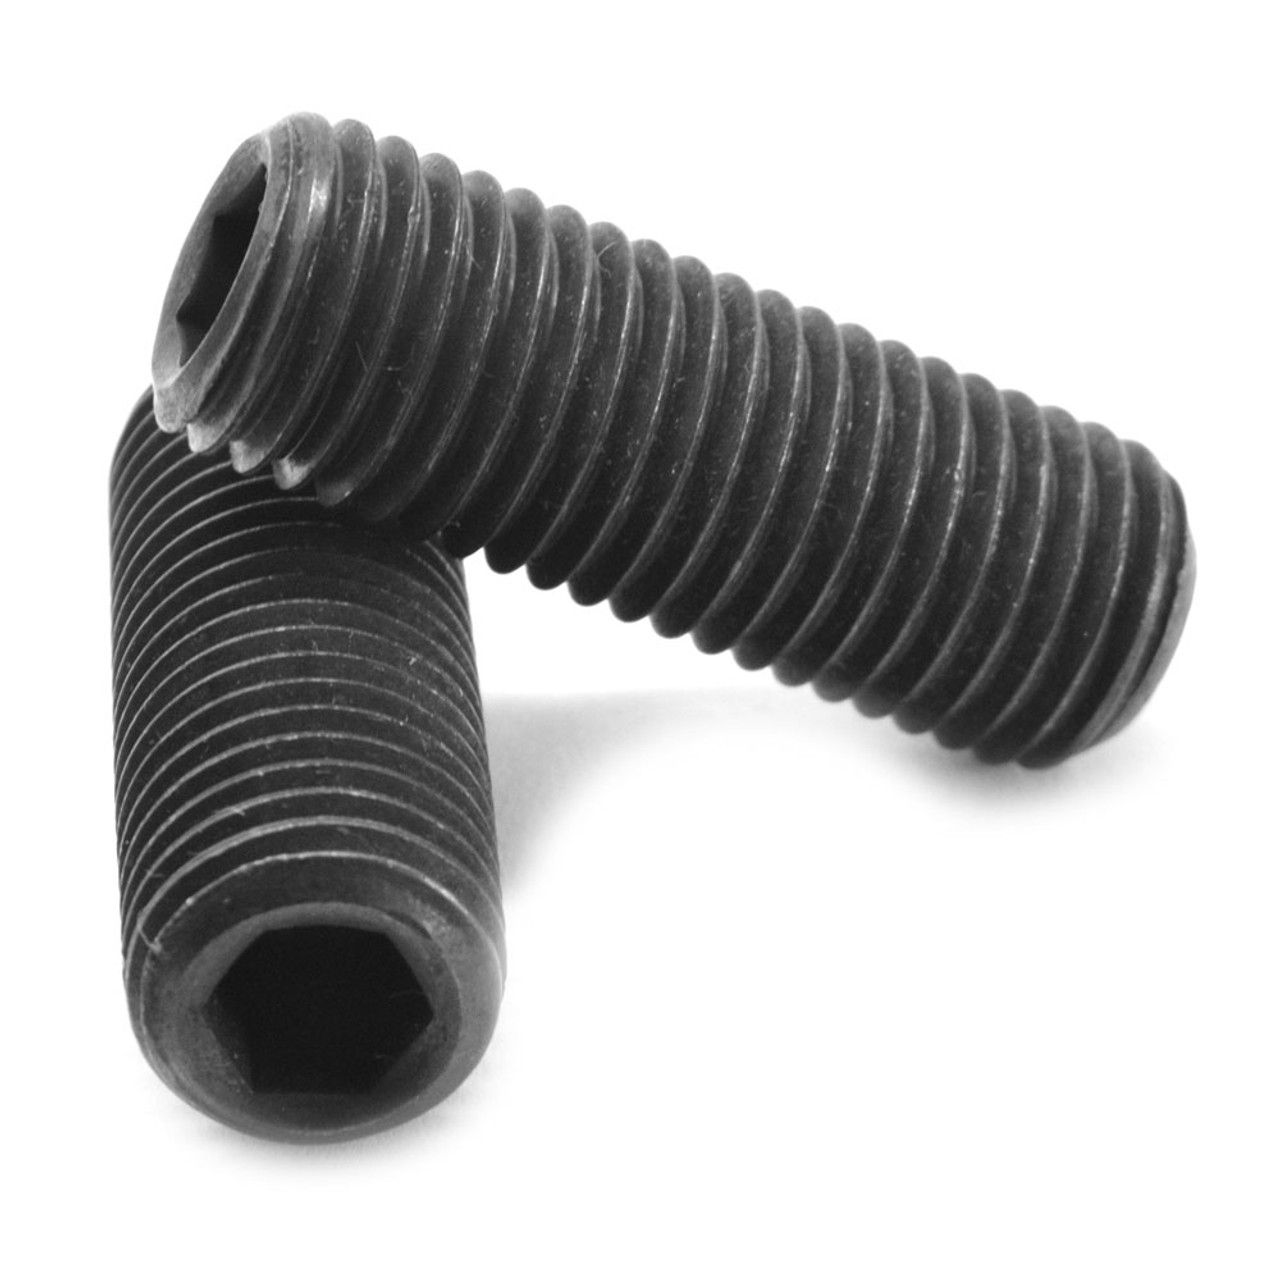 M24 x 3.00 x 60 MM Coarse Thread ISO 4029 / DIN 916 Class 45H Socket Set Screw Cup Point Alloy Steel Black Oxide